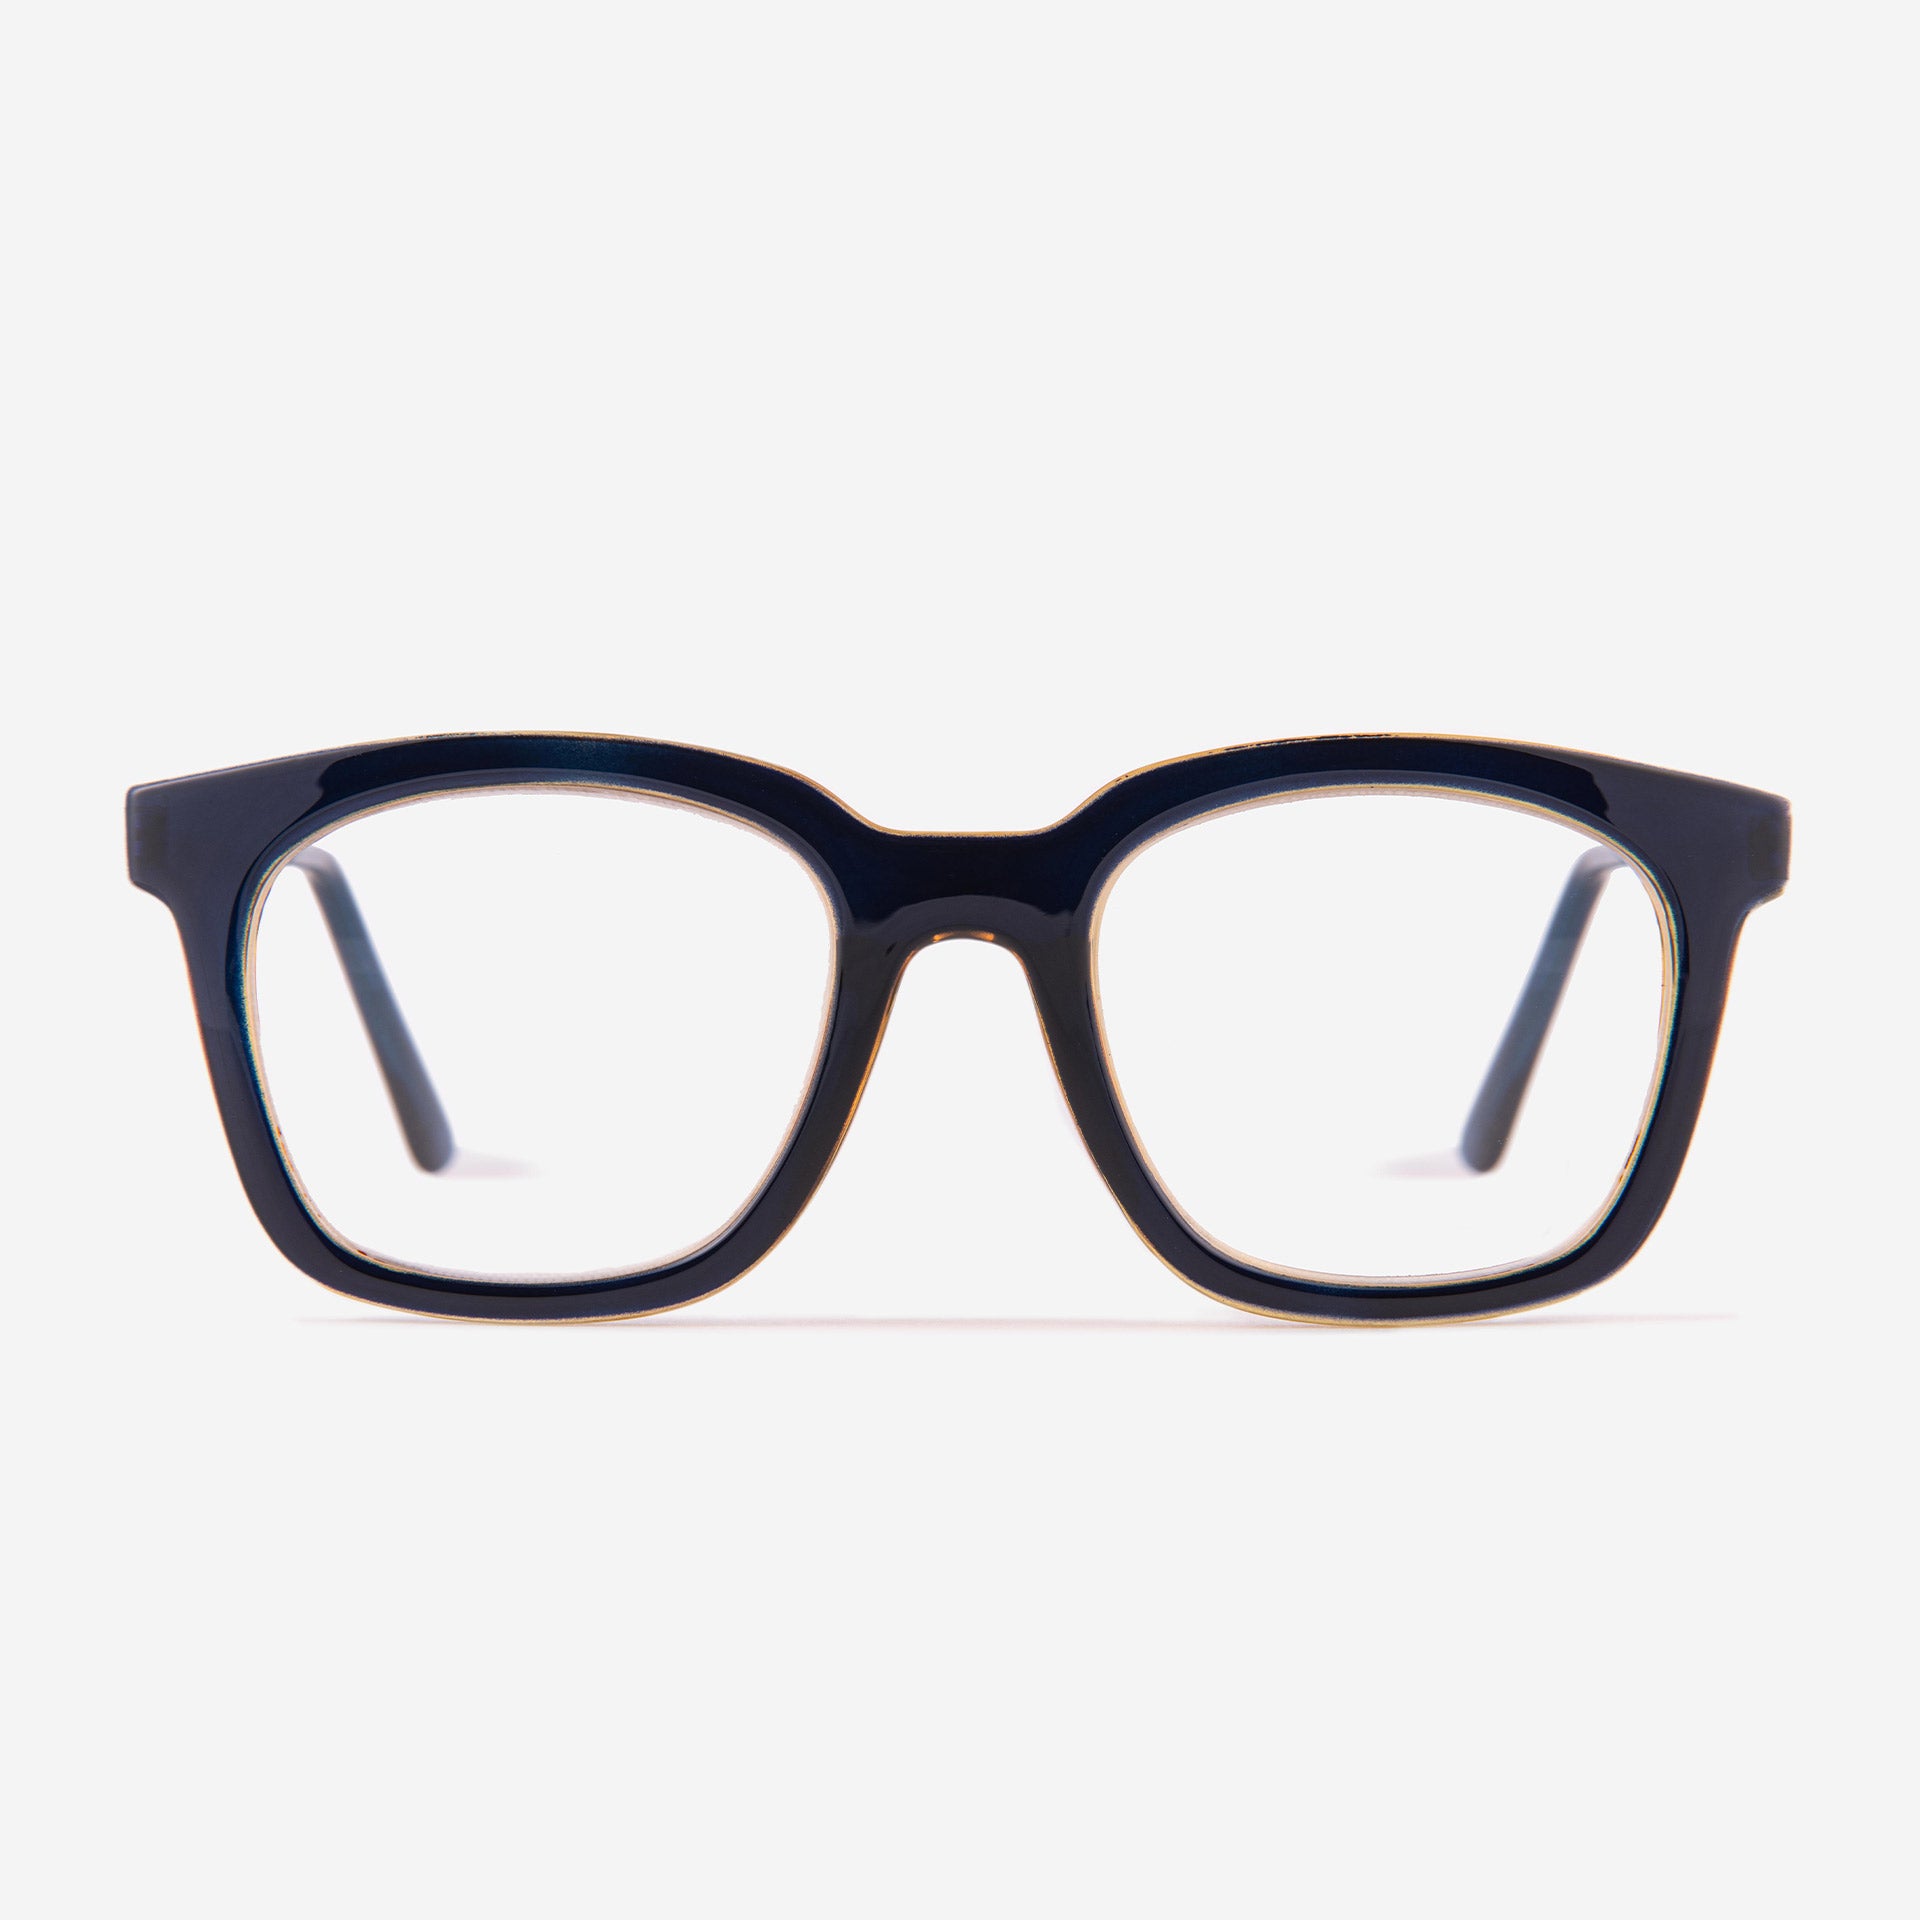 Blue square reading glasses